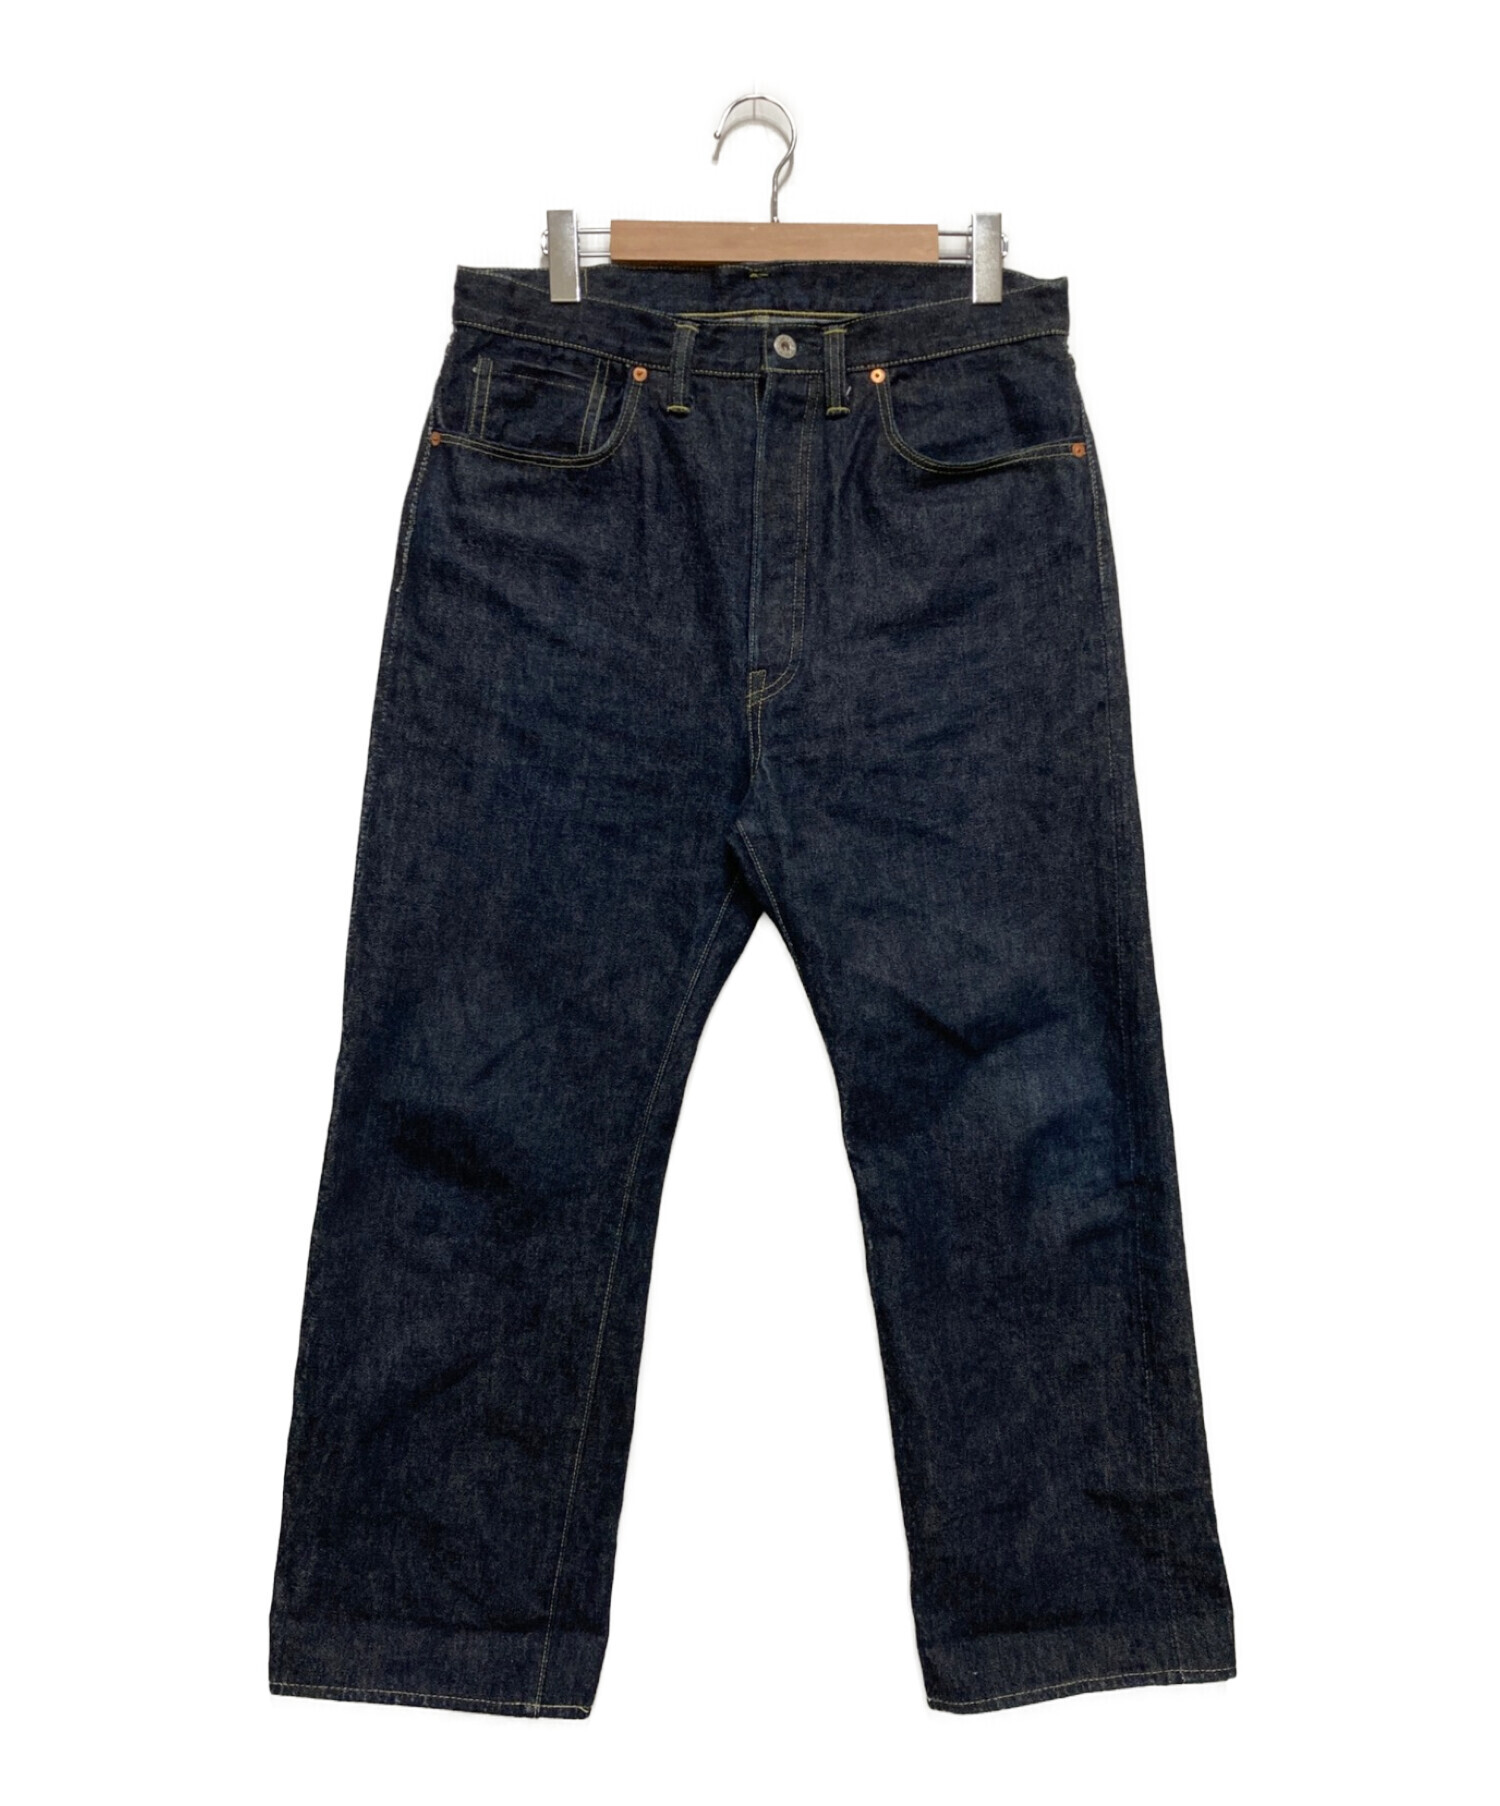 TCB jeans (ティーシービー ジーンズ) デニムパンツ インディゴ サイズ:SIZE 91cm (W36)